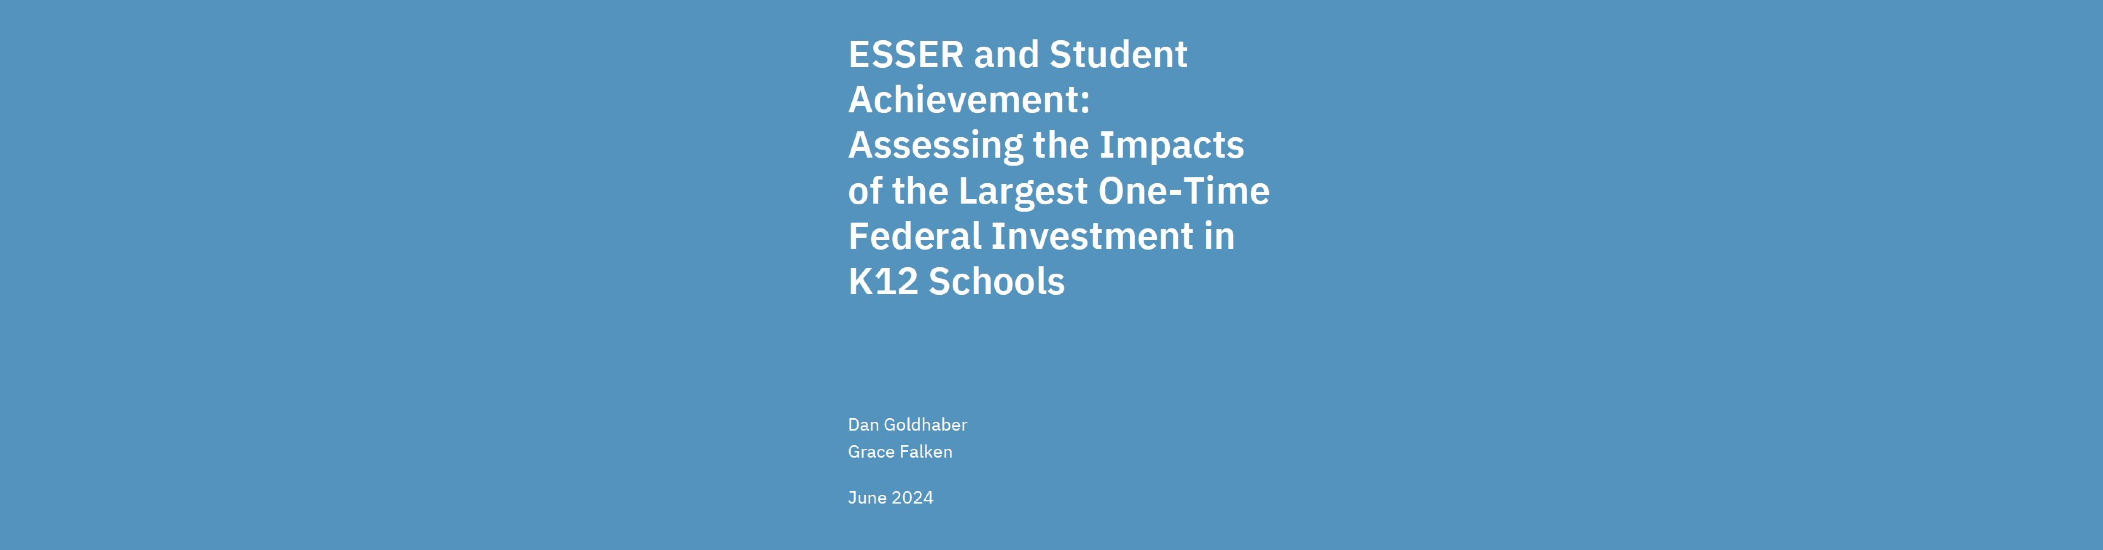 New CALDER Working Paper on ESSER and Student Achievement